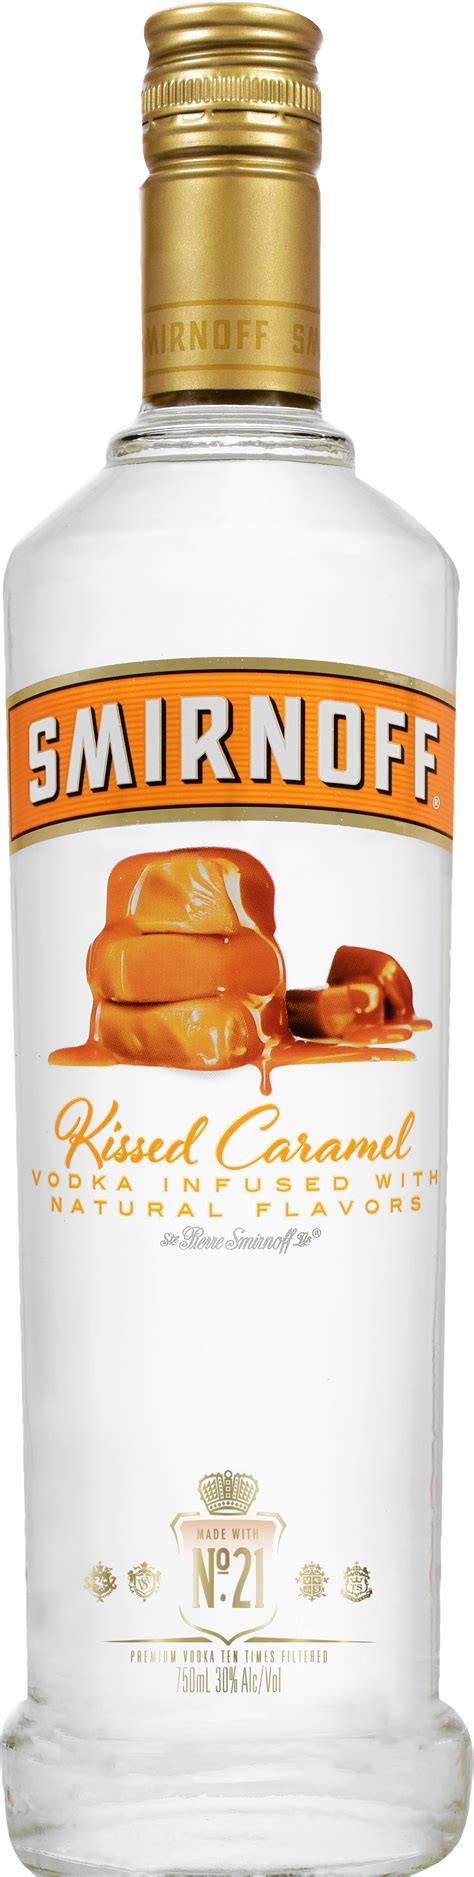 Kissed caramel spiced tea drink recipe: Smirnoff - Kissed Caramel Vodka - Knights Liquor Warehouse